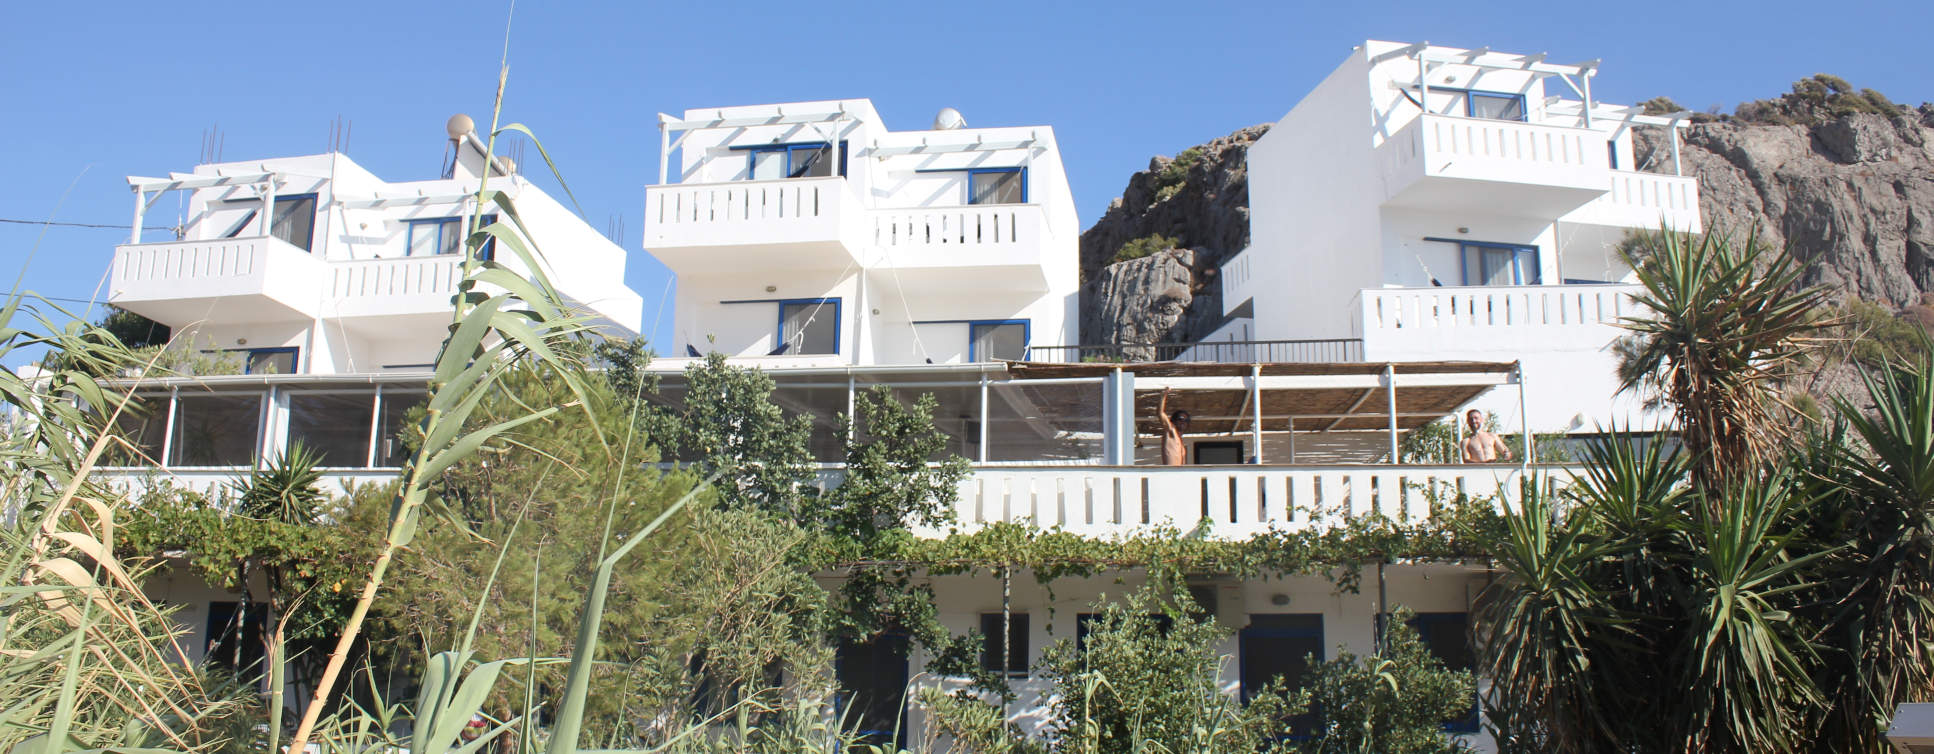 The balconies and terraces of Yoga Rocks Crete